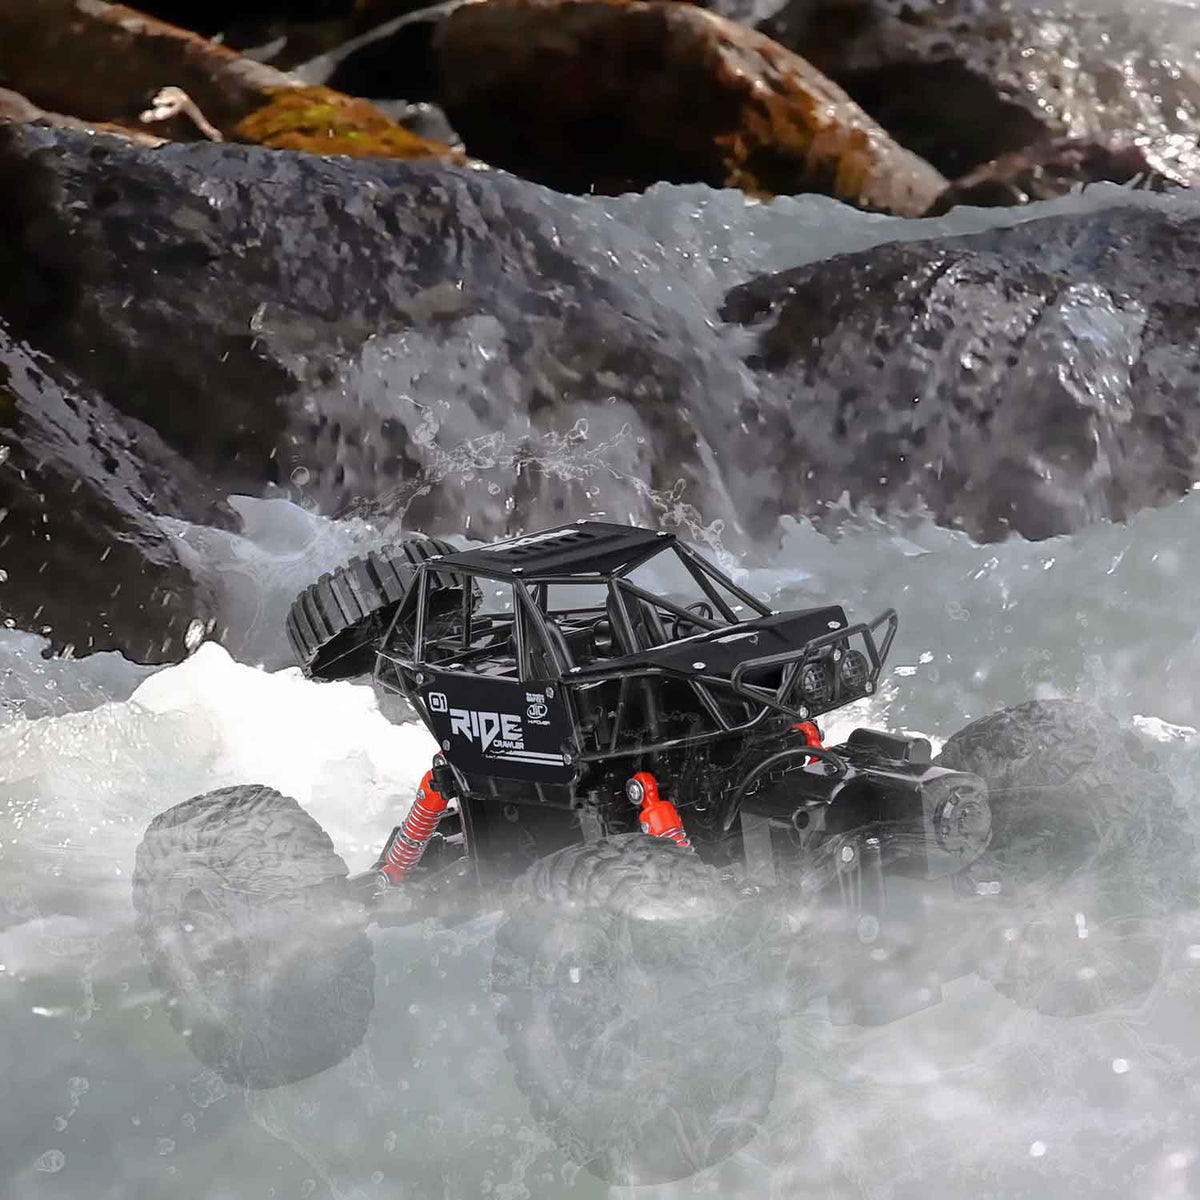 Remote Control Waterproof Amphibious Car (Black) - For All Terrains